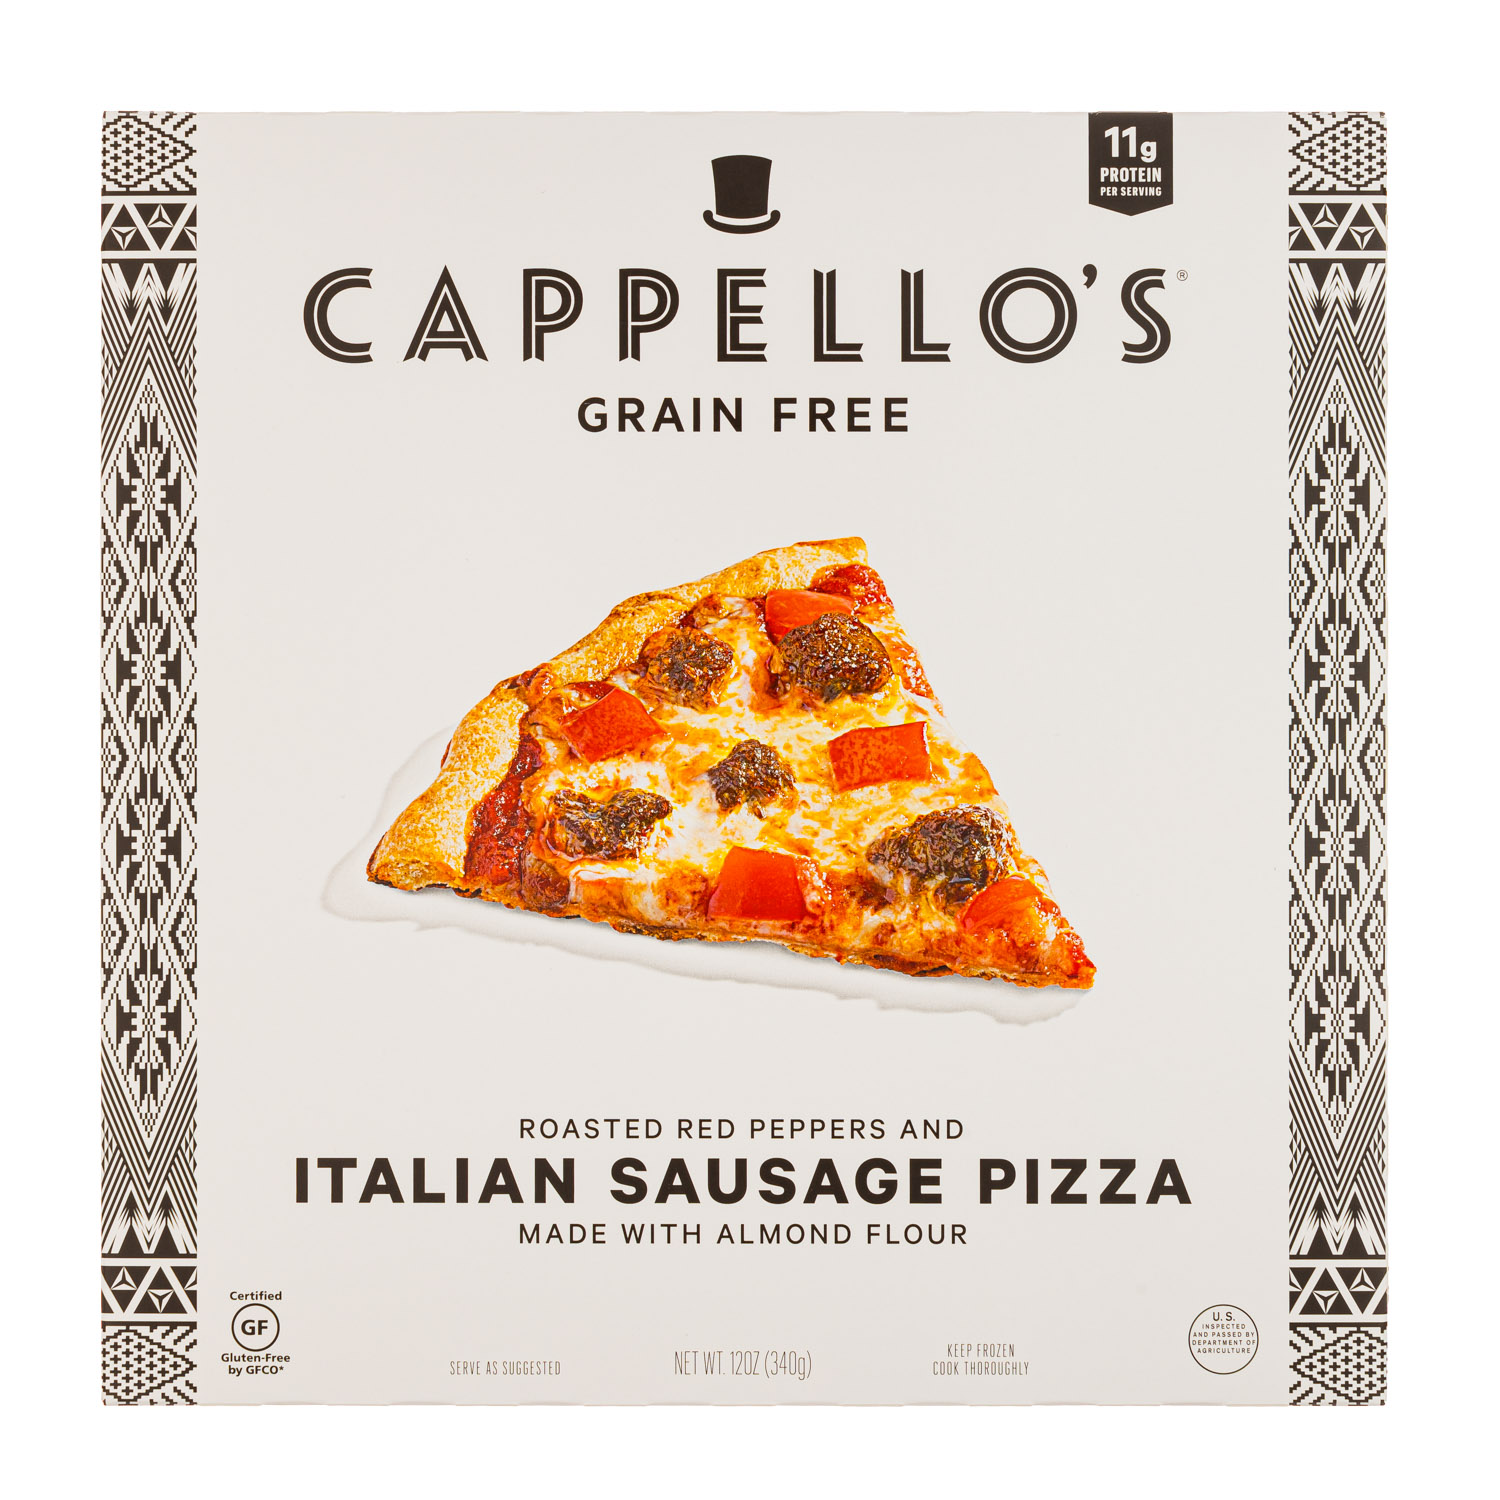 Italian Sausage Pizza 2019